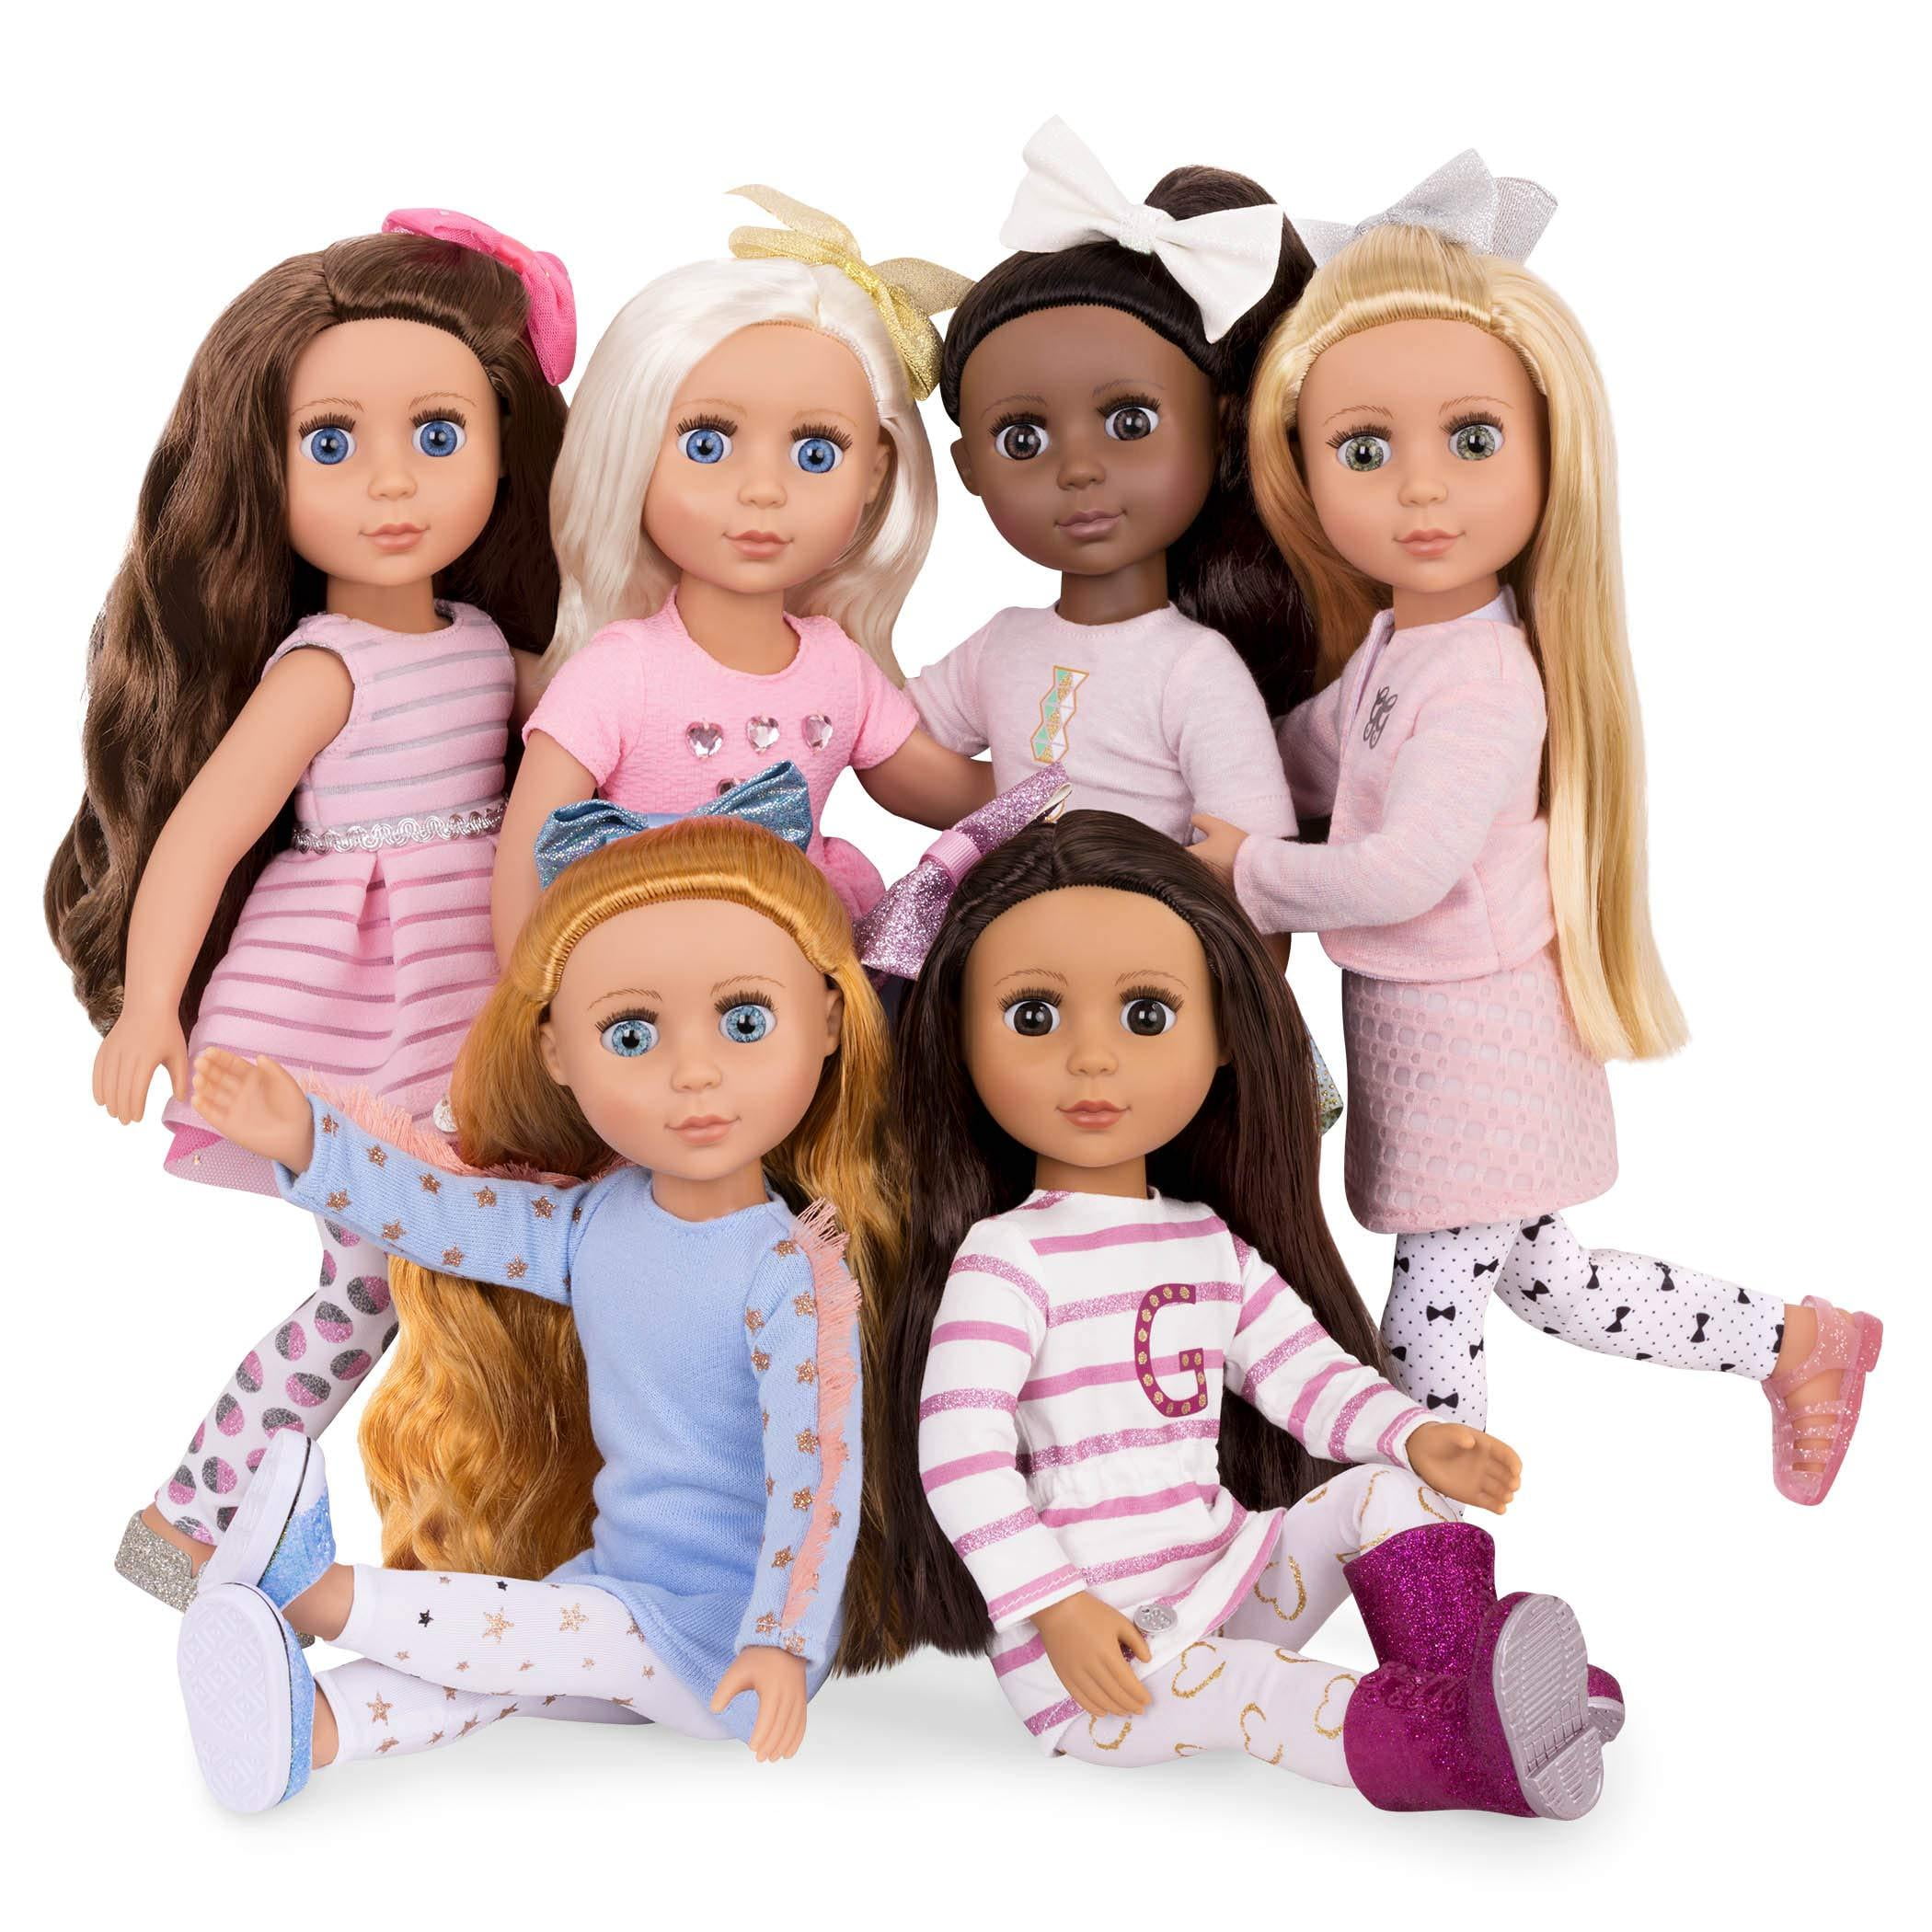 Bluebell 14 Posable Fashion Doll Dolls for Girls Age 3 & Up Glitter Girls Dolls by Battat